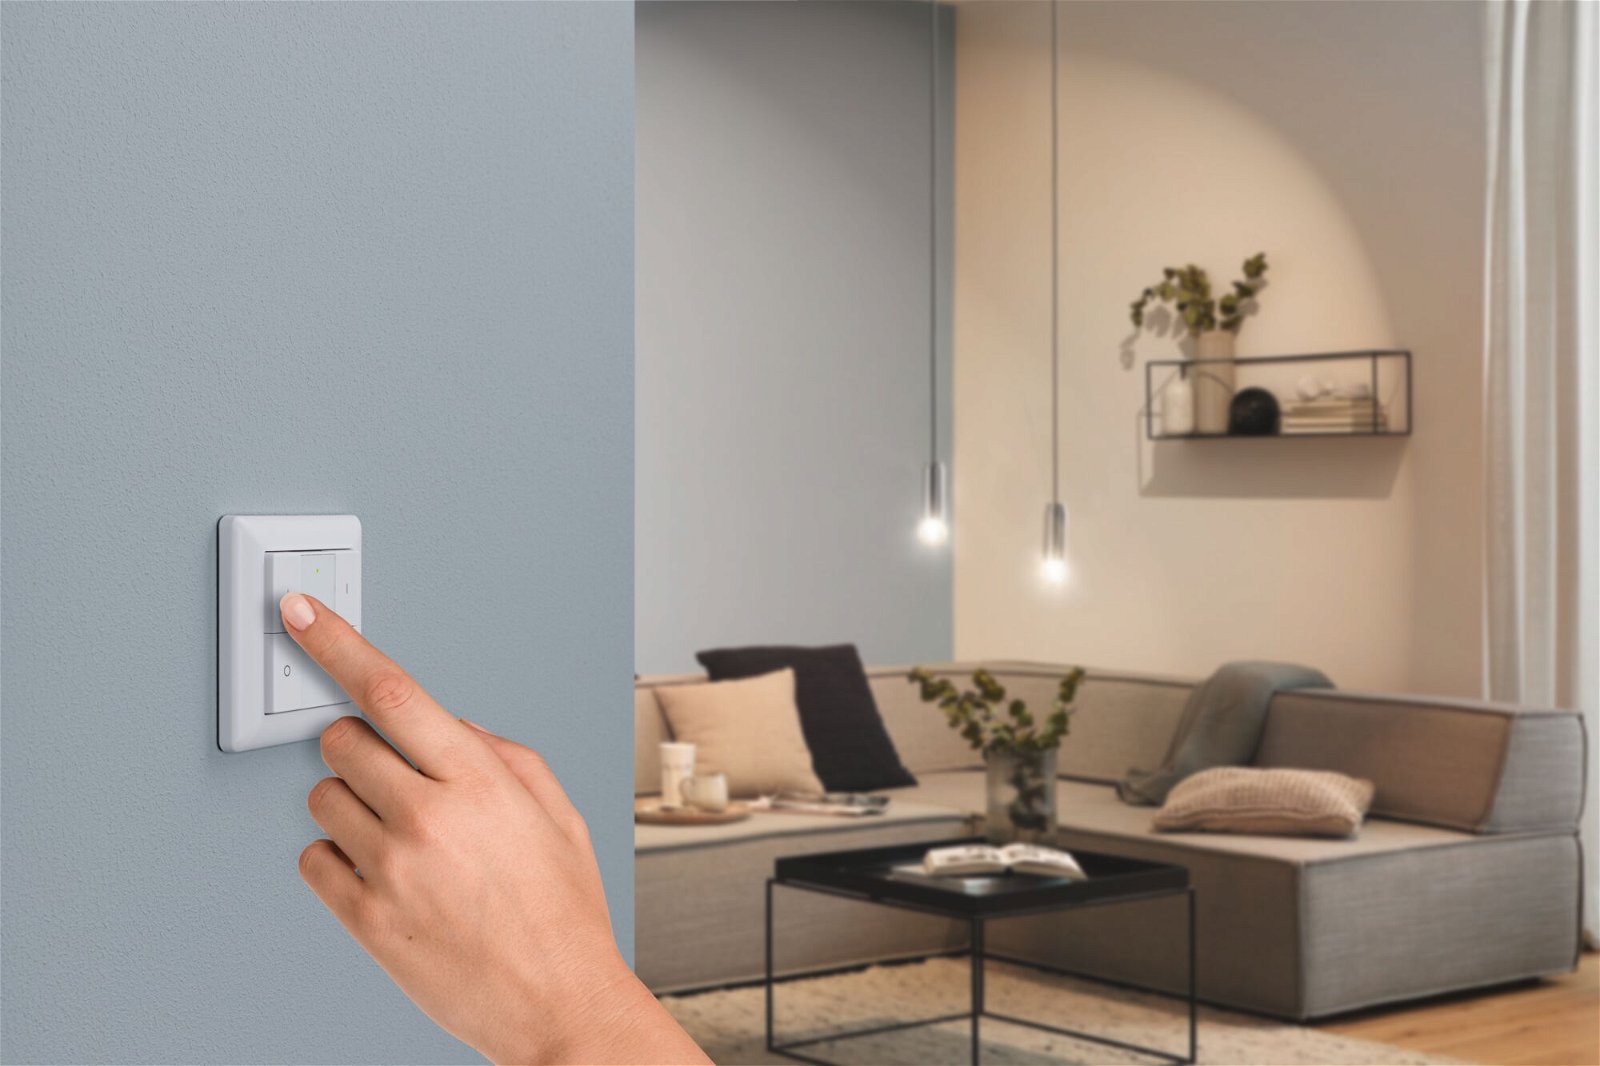 Preisattraktives Starterset Smart Home Zigbee 3.0 LED Birne Filament G95 RGBW + Gateway + Schalter